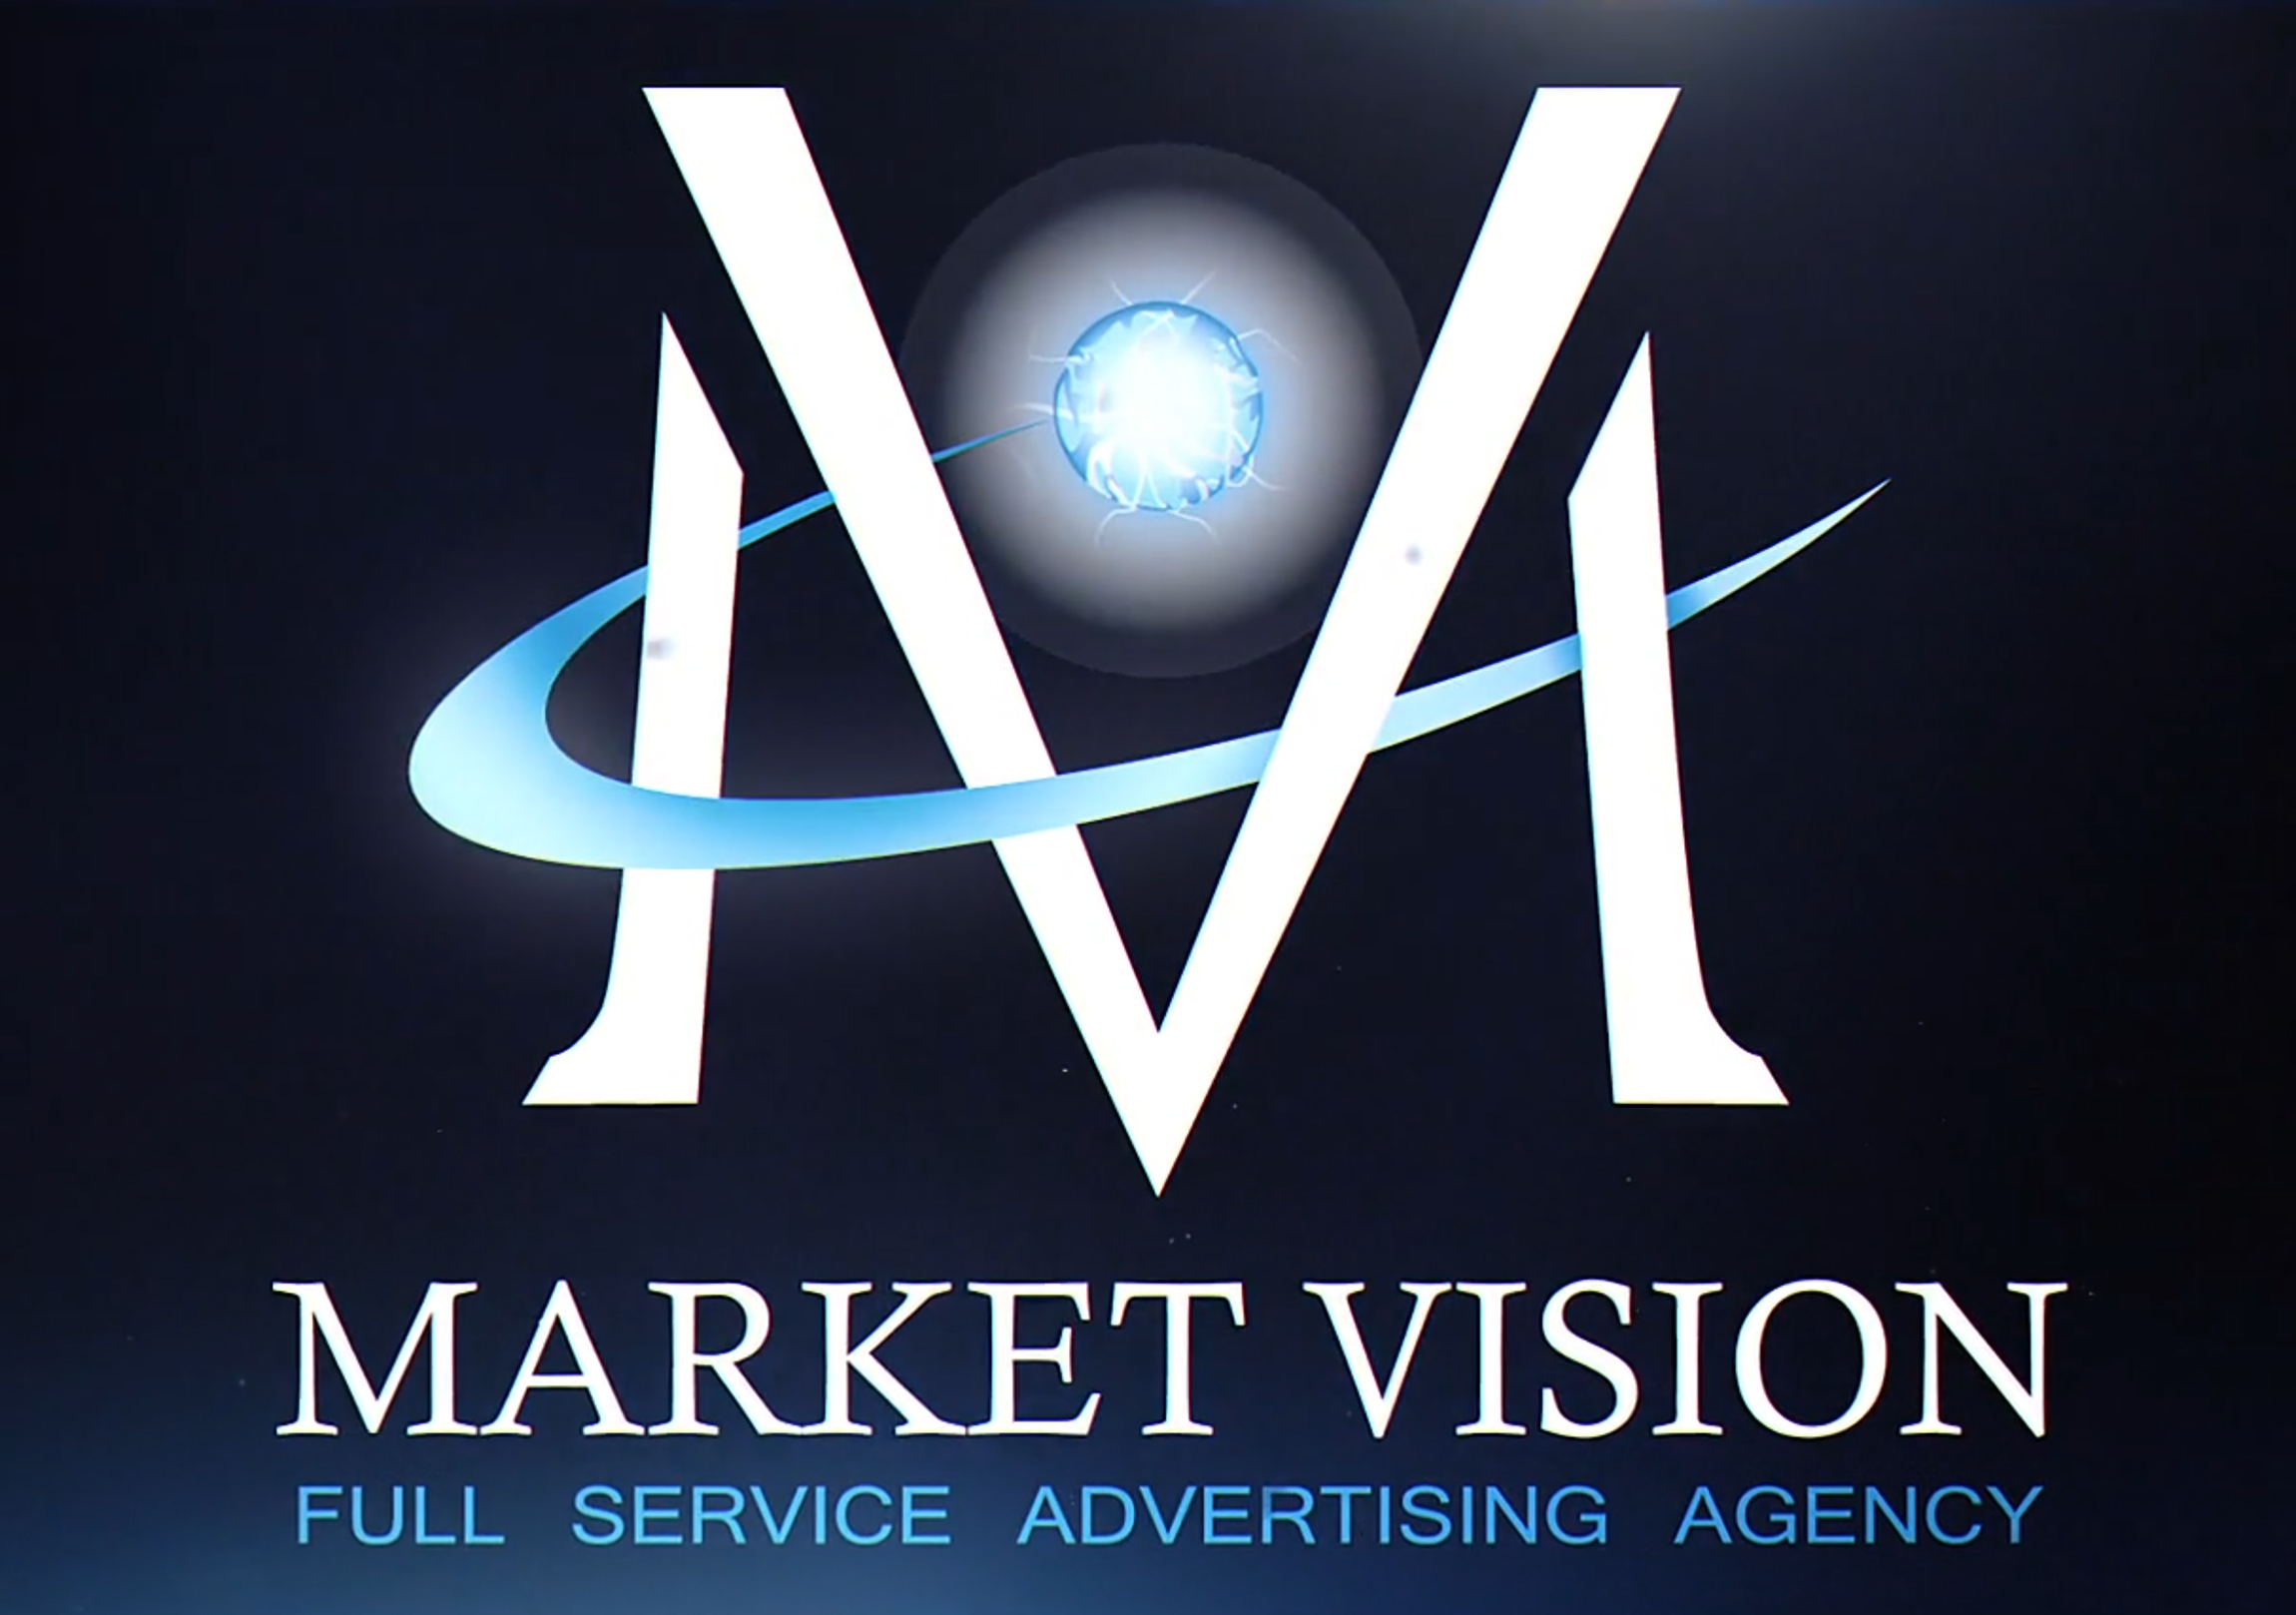 Market Vision Full Service Advertising Agency | Spokane Marketing